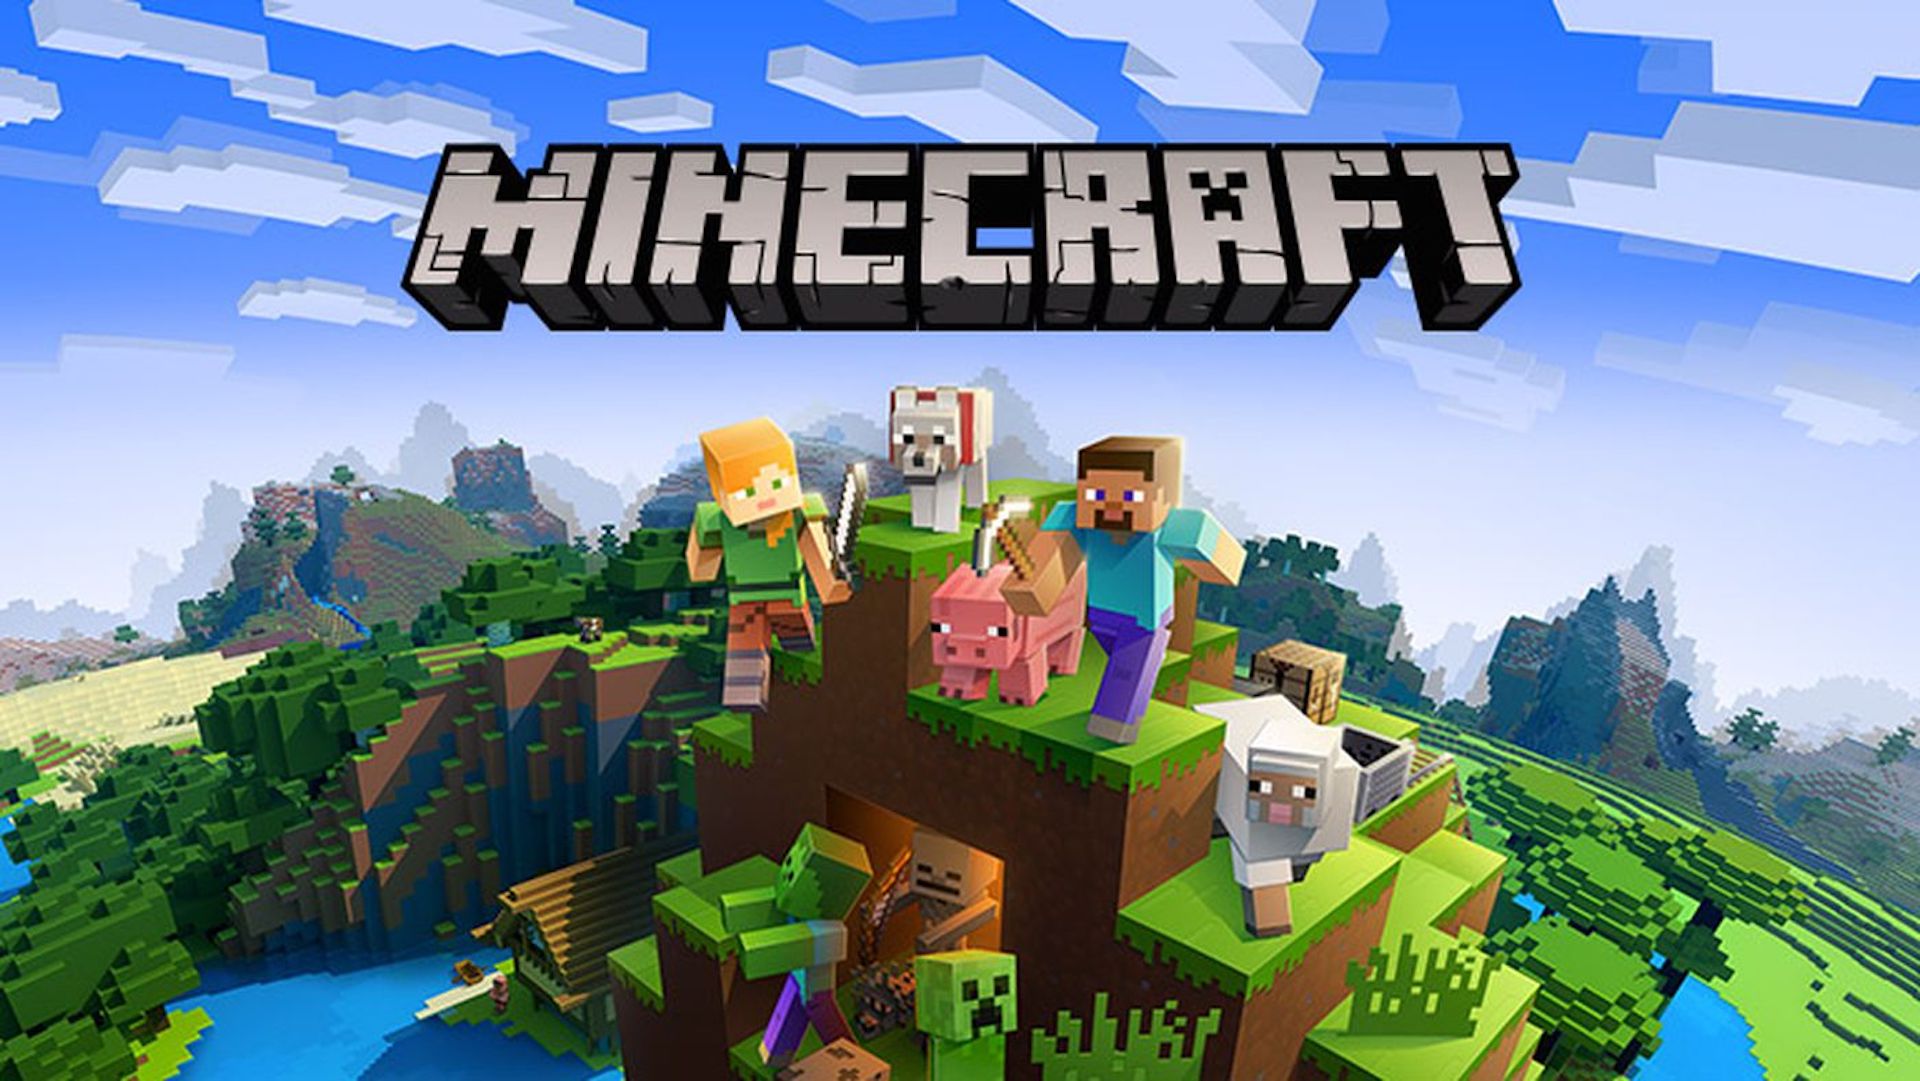 Gerucht: Minecraft komt mogelijk naar PlayStation 5